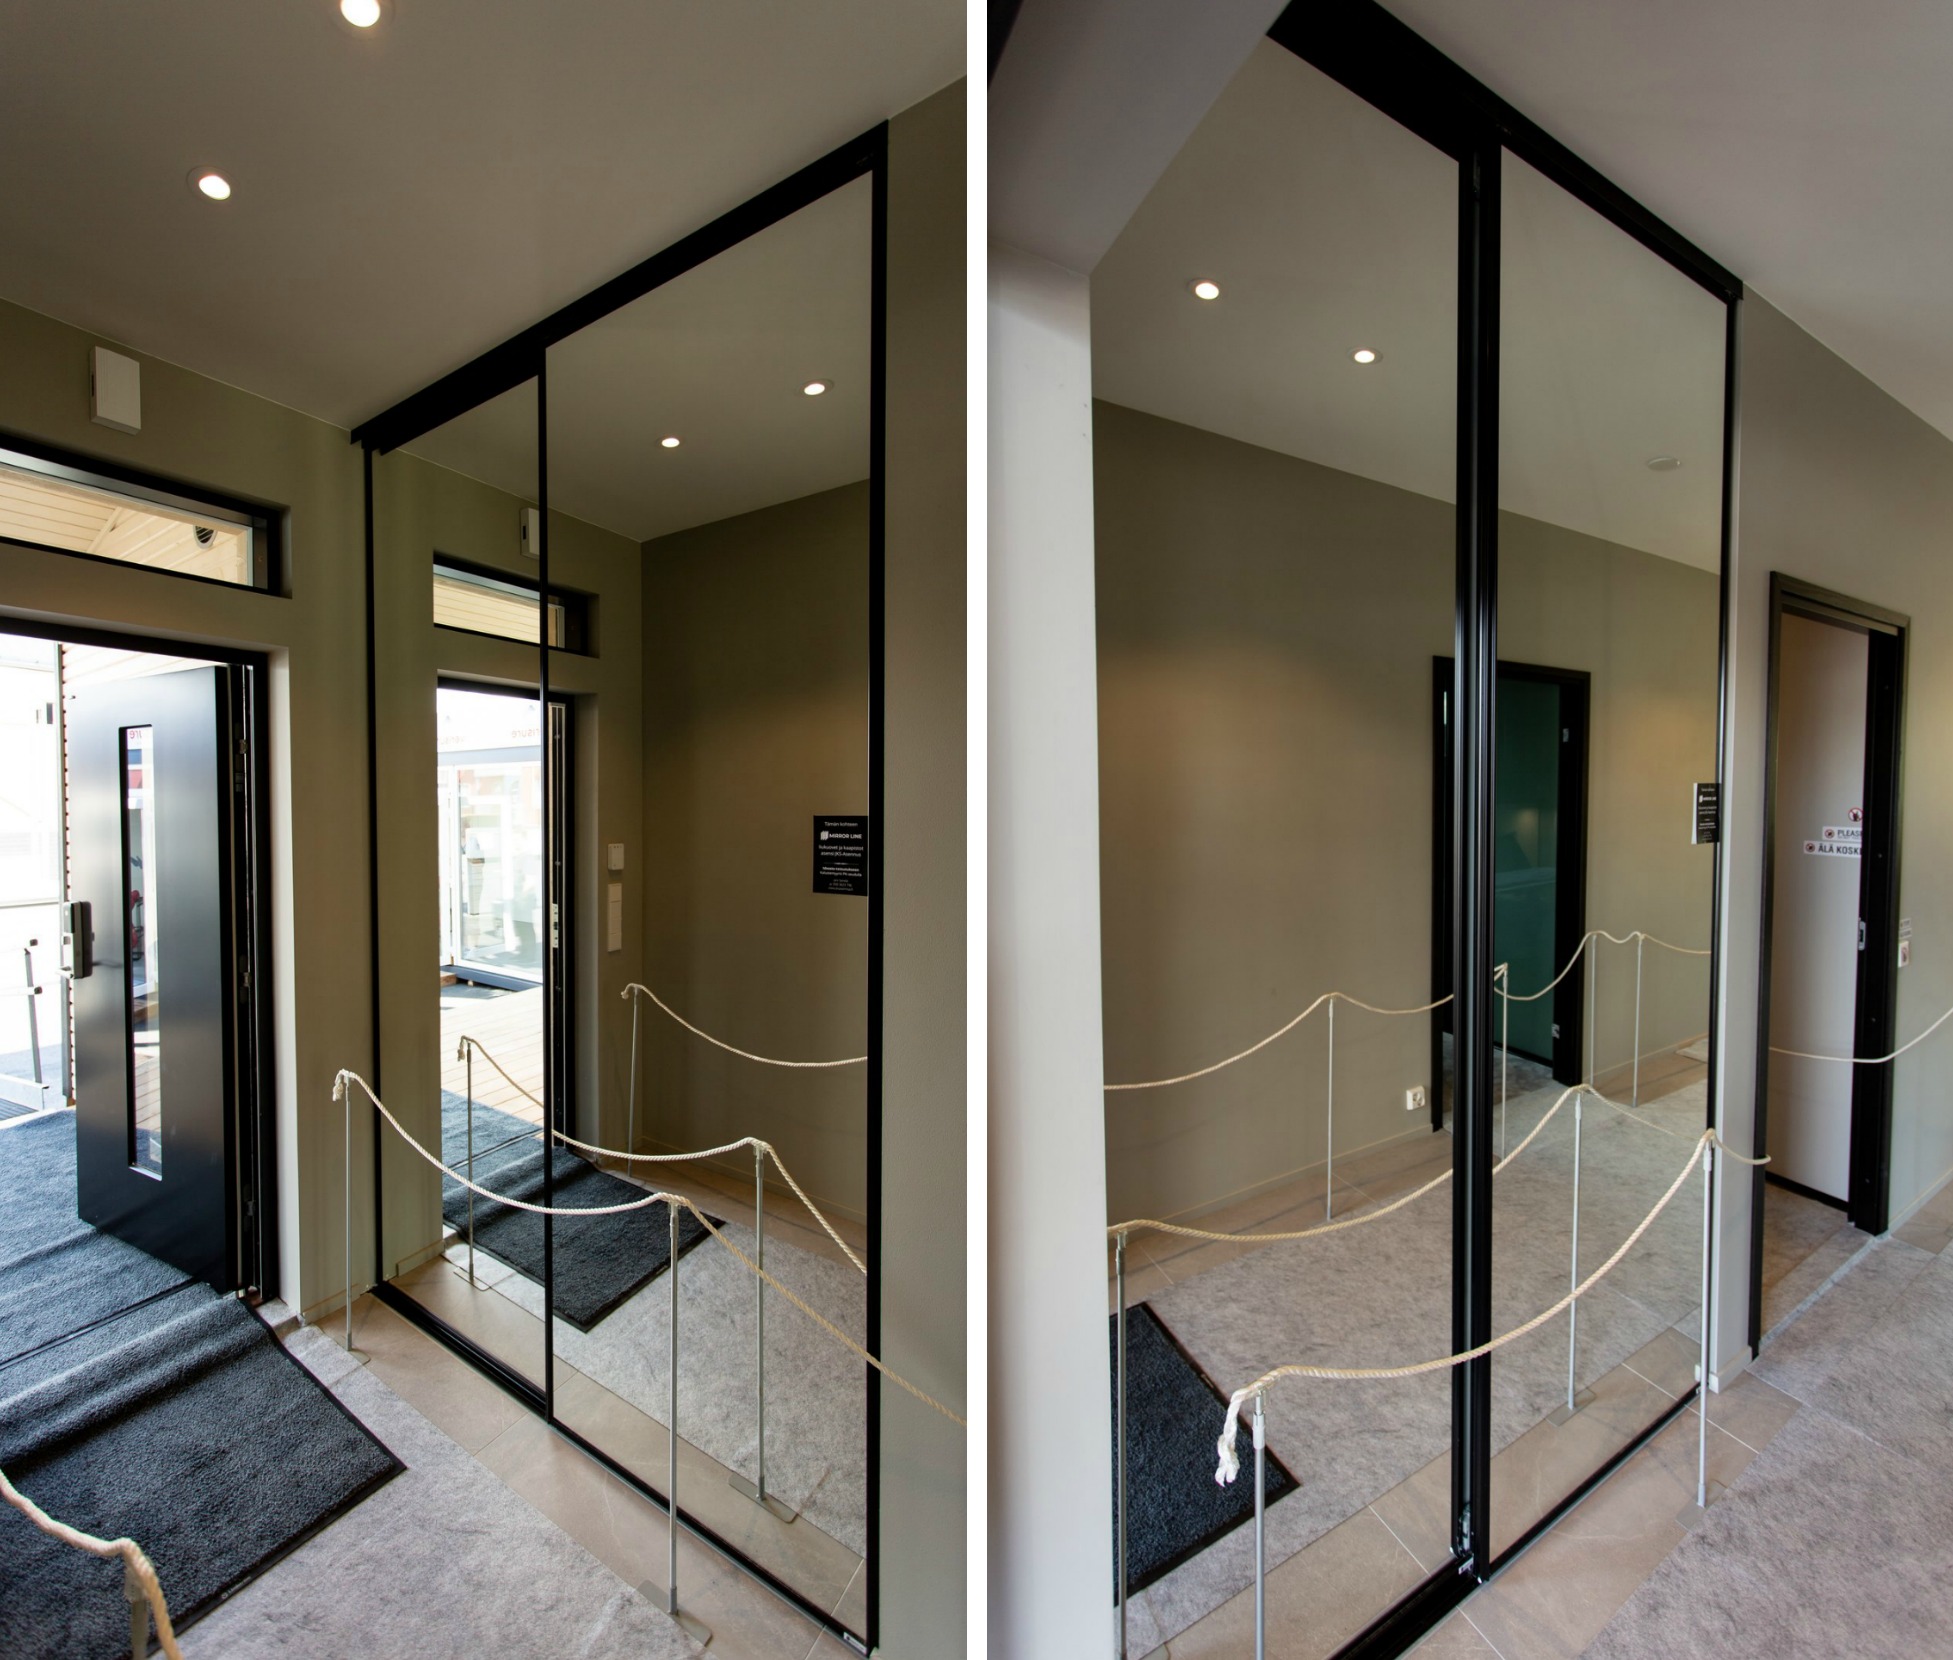 Mirror Line liukuovi peiliovi eteisen sisustusideat Asuntomessut 2020 Kohde 2 Pikkupolku Moderni